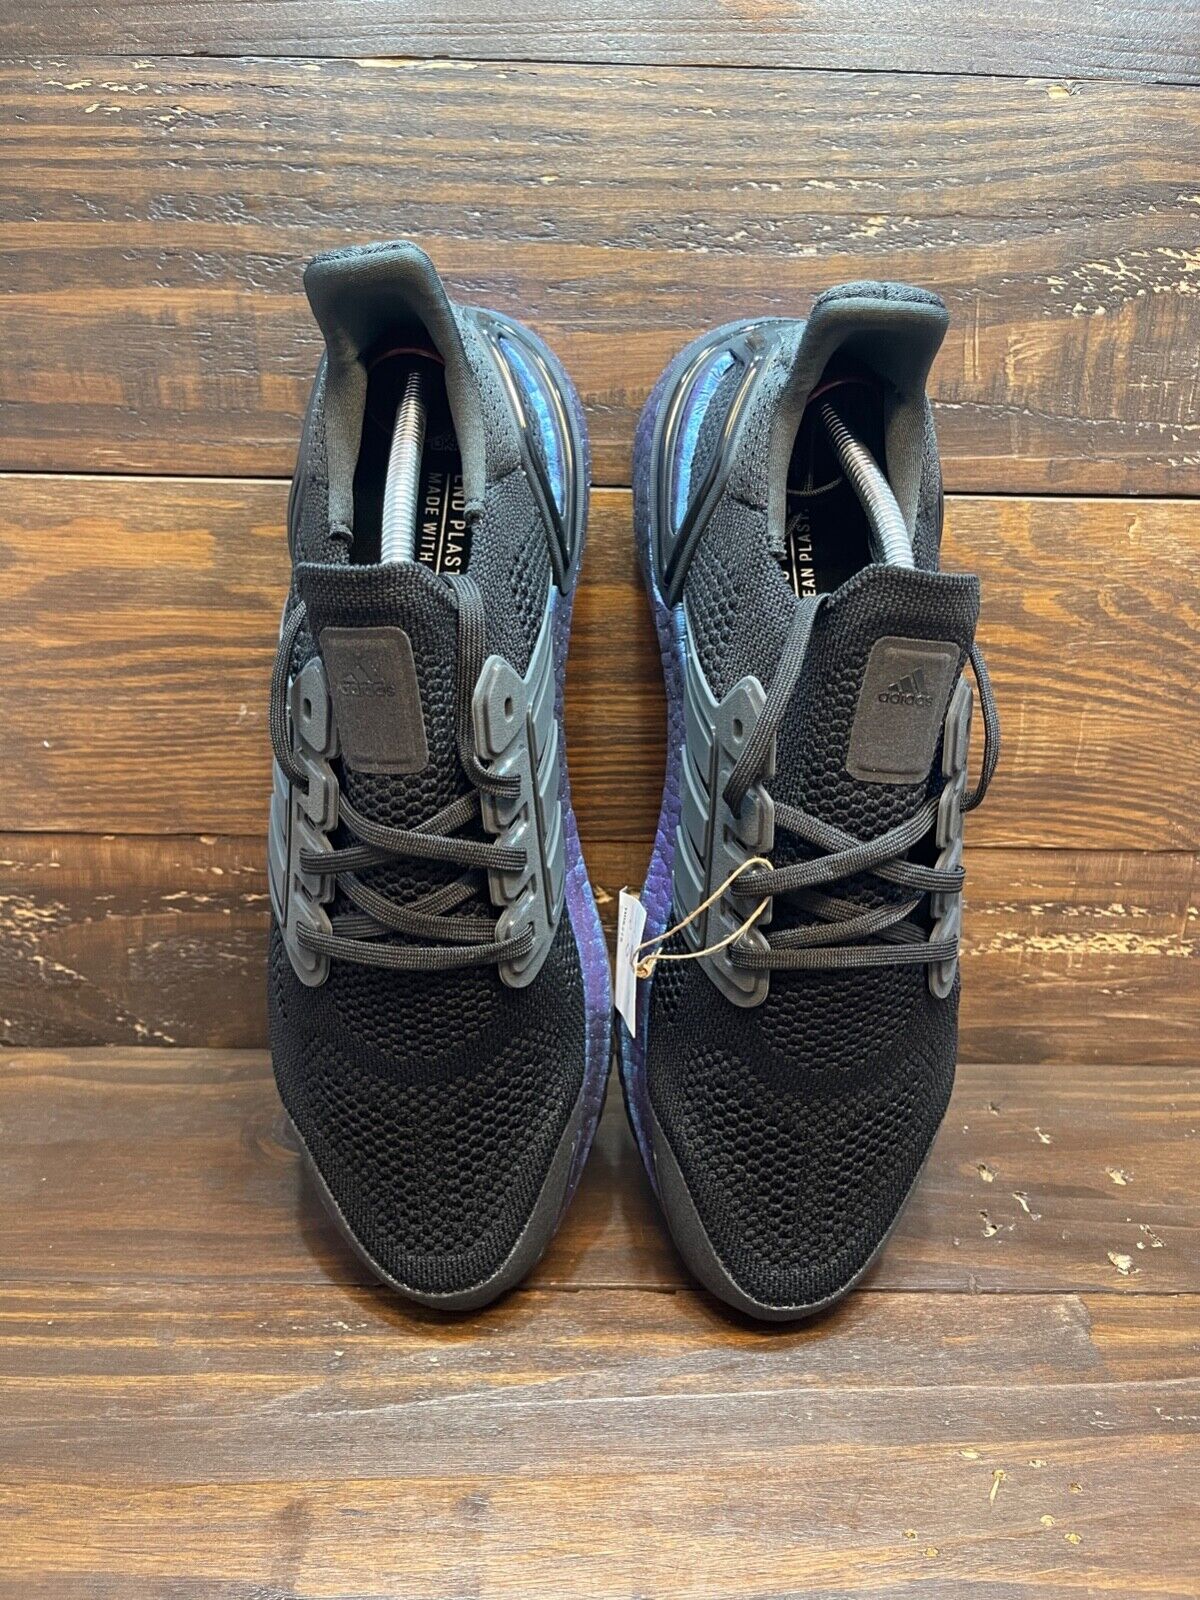 Adidas UltraBoost 19.5 DNA Mens Shoes H06275 | eBay